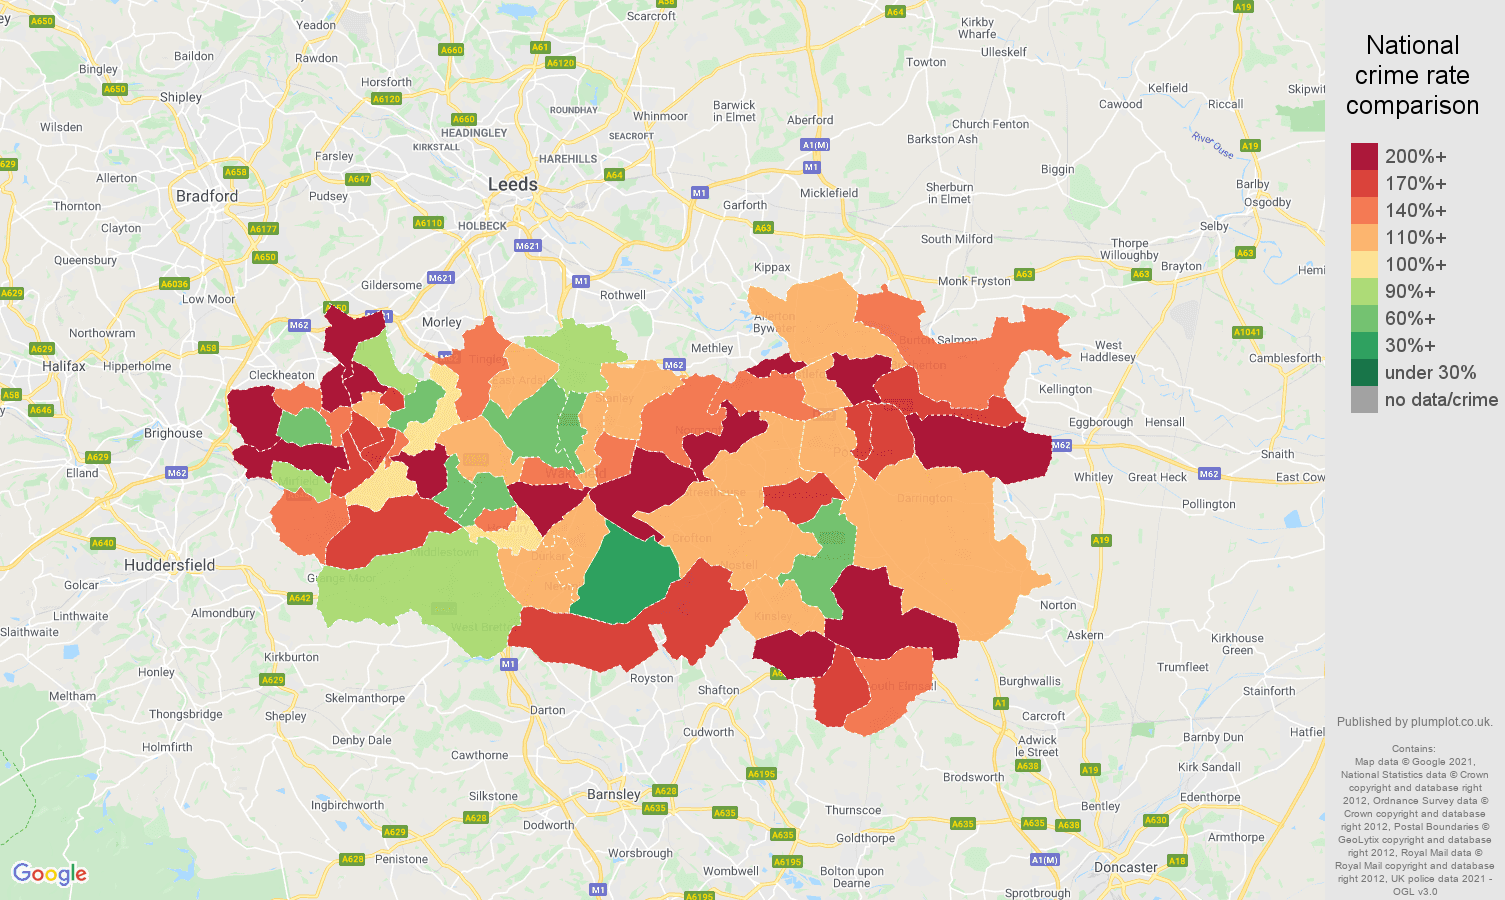 Wakefield criminal damage and arson crime rate comparison map